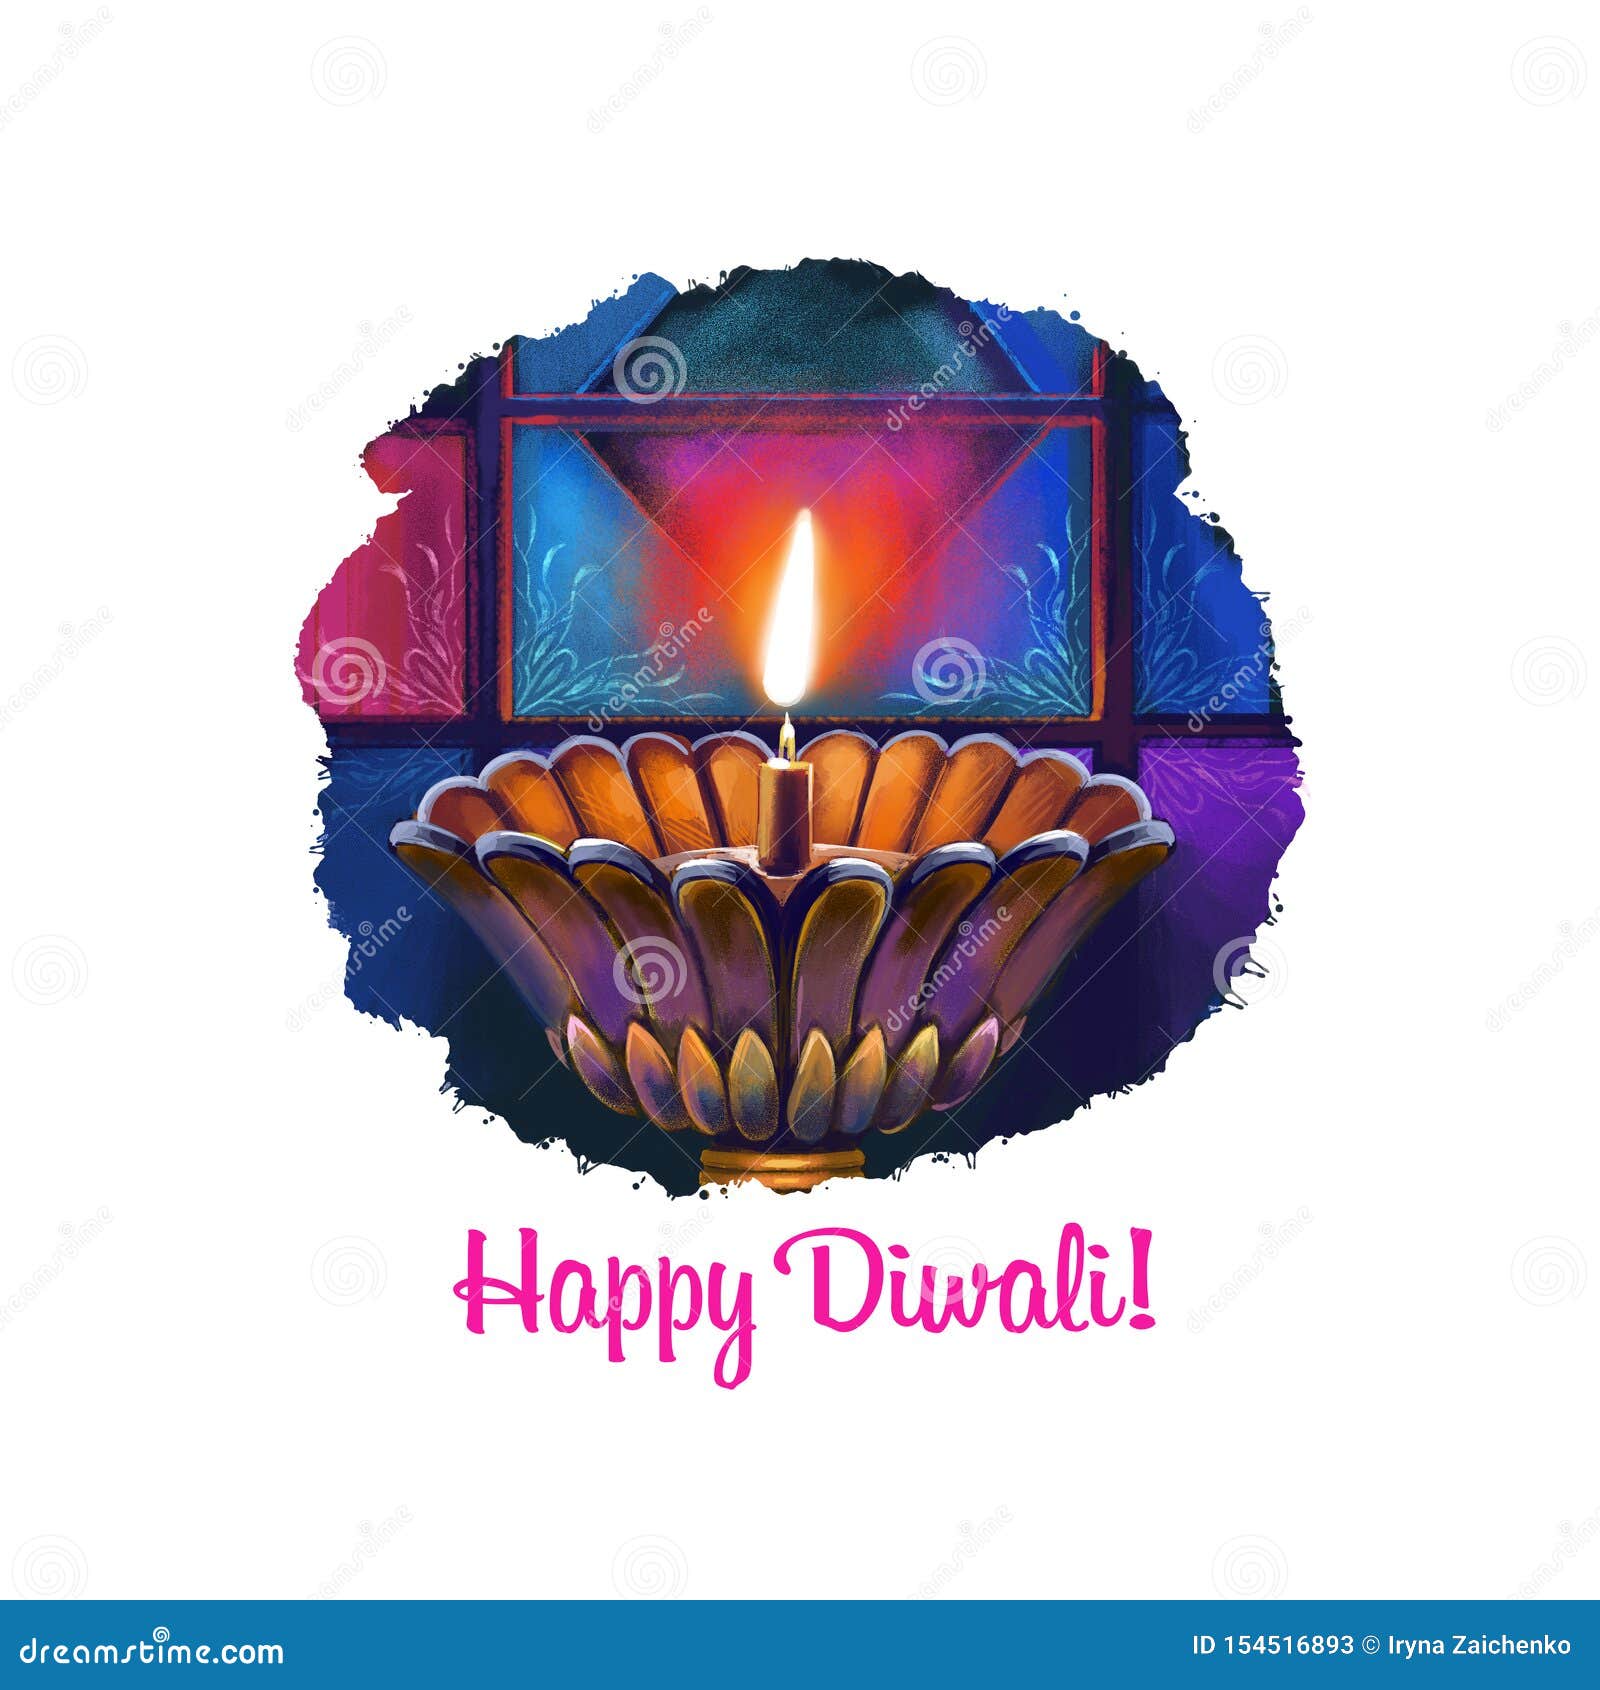 Happy Diwali Digital Art Illustration Isolated on White Background. Indian  Festival of Lights Stock Illustration - Illustration of asia, diwali:  154516893